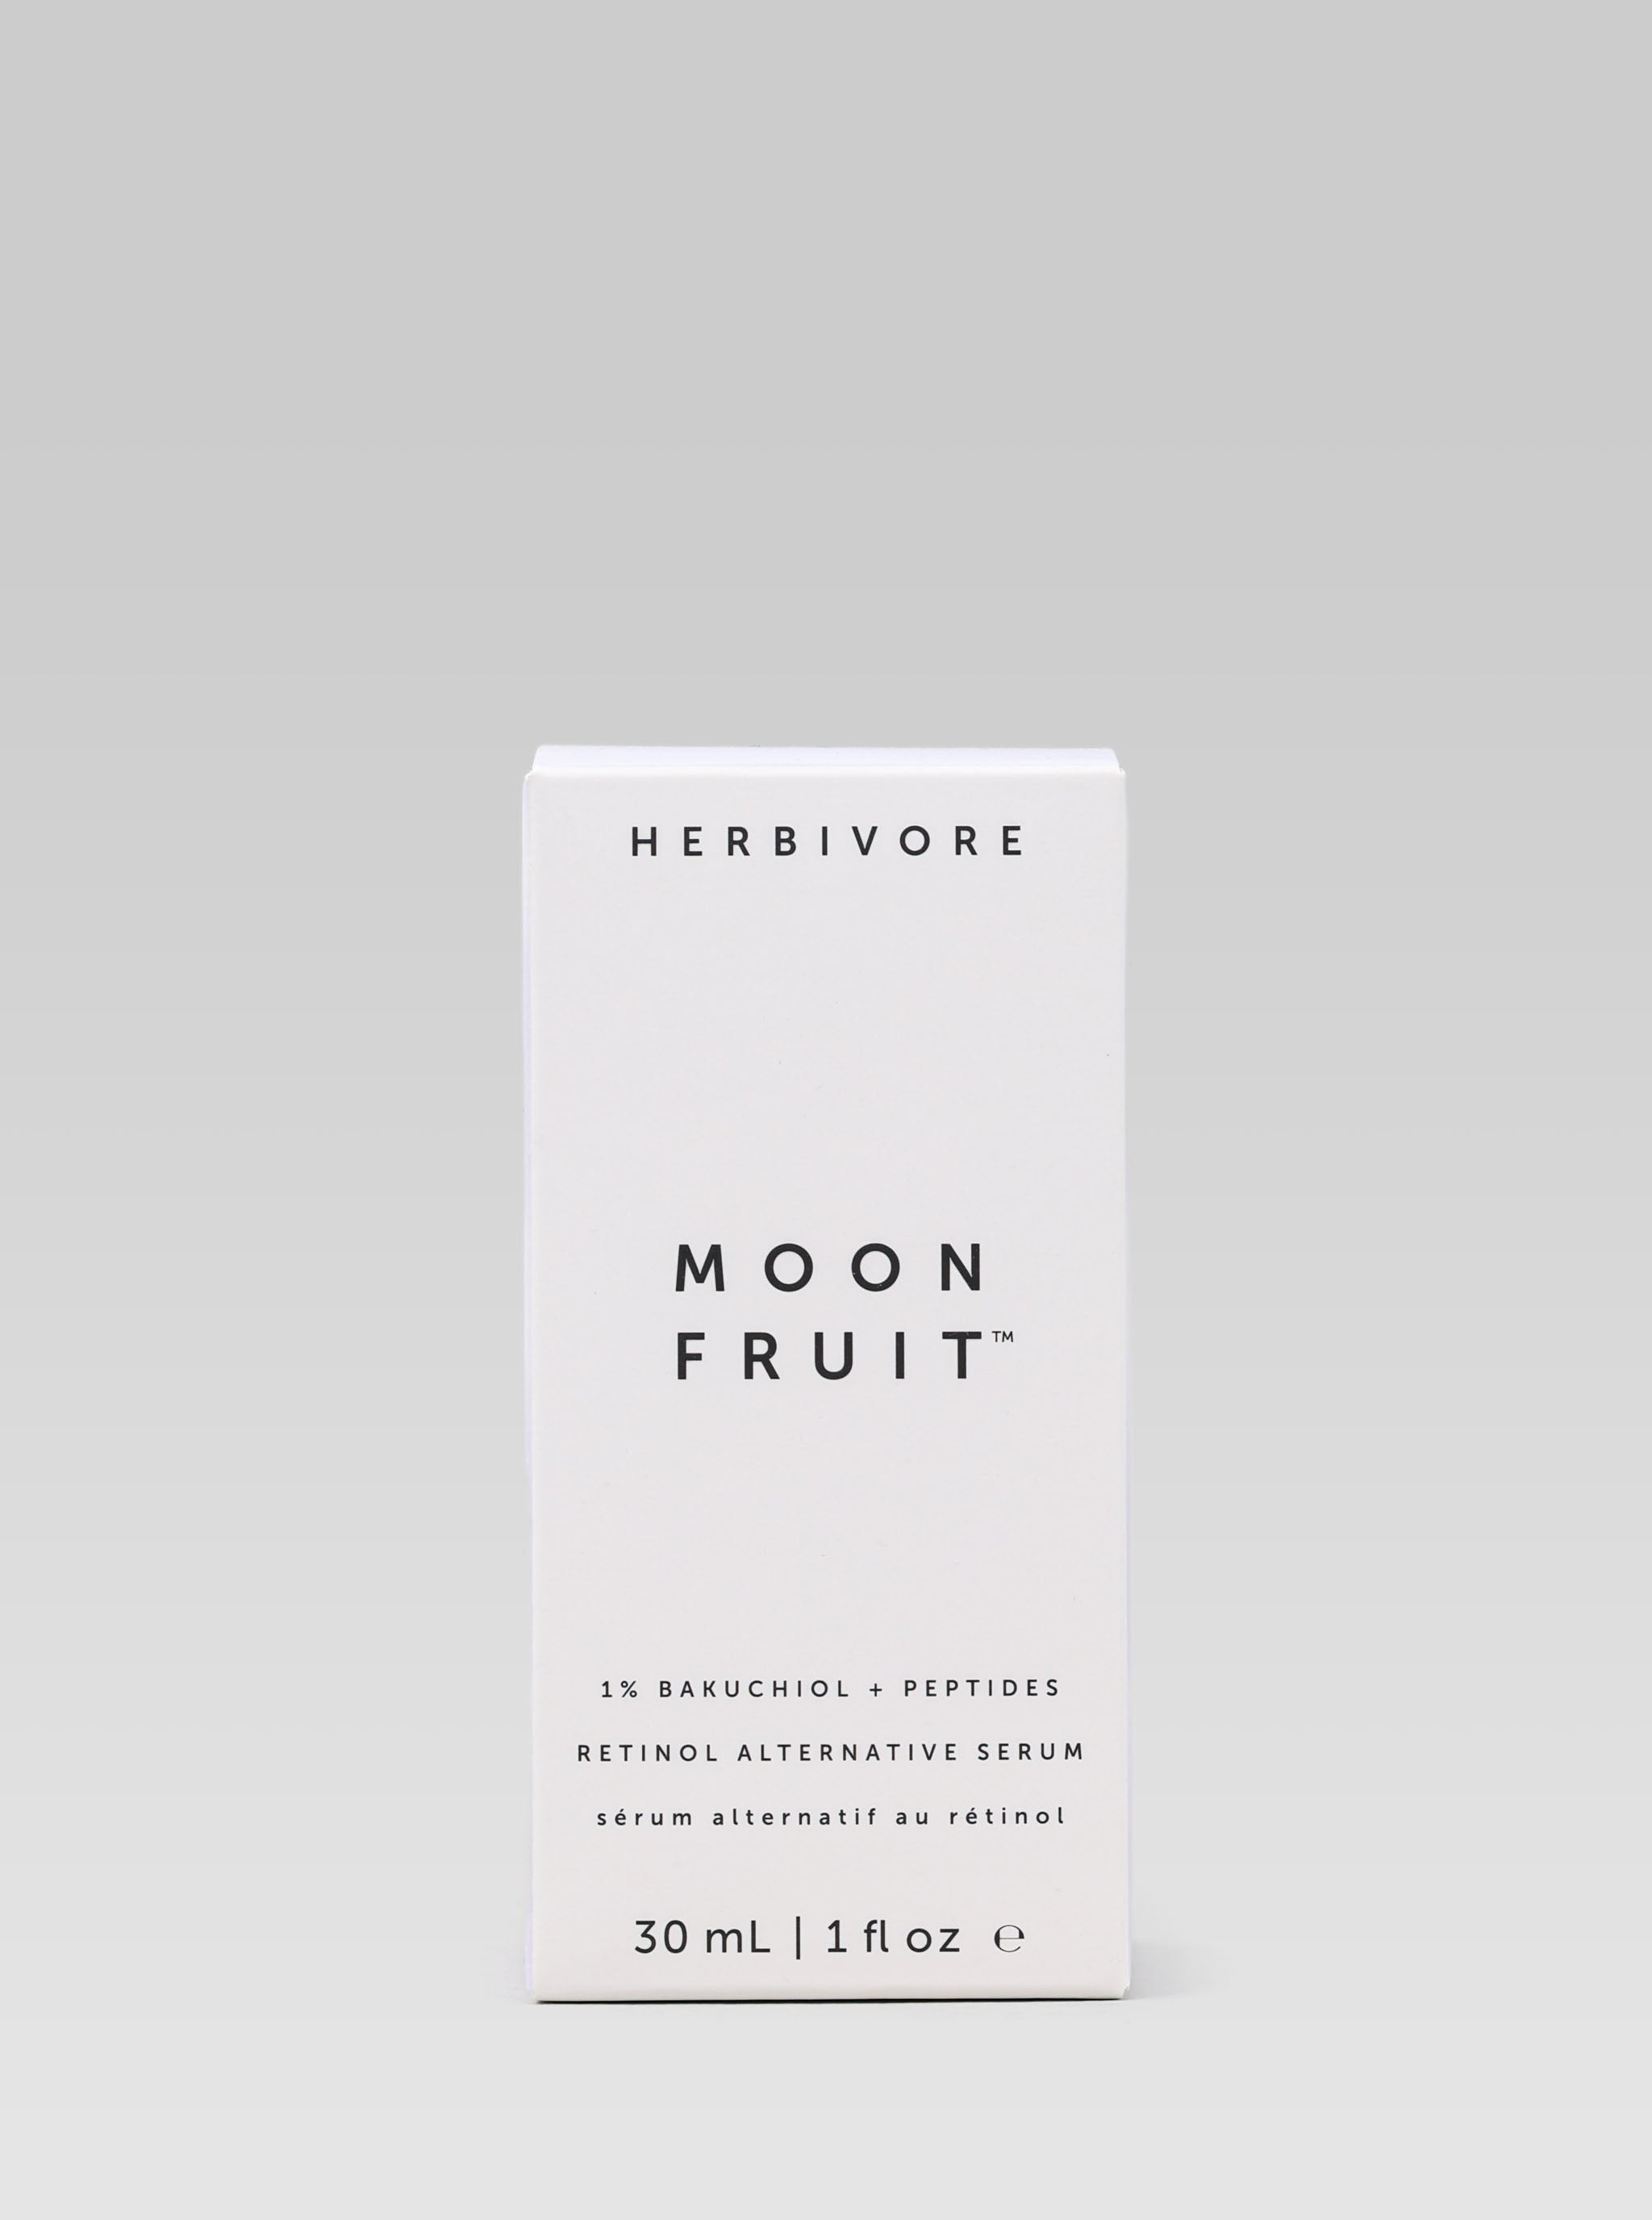 HERBIVORE BOTANICALS Moon Fruit Retinol Alternative Serum product packaging